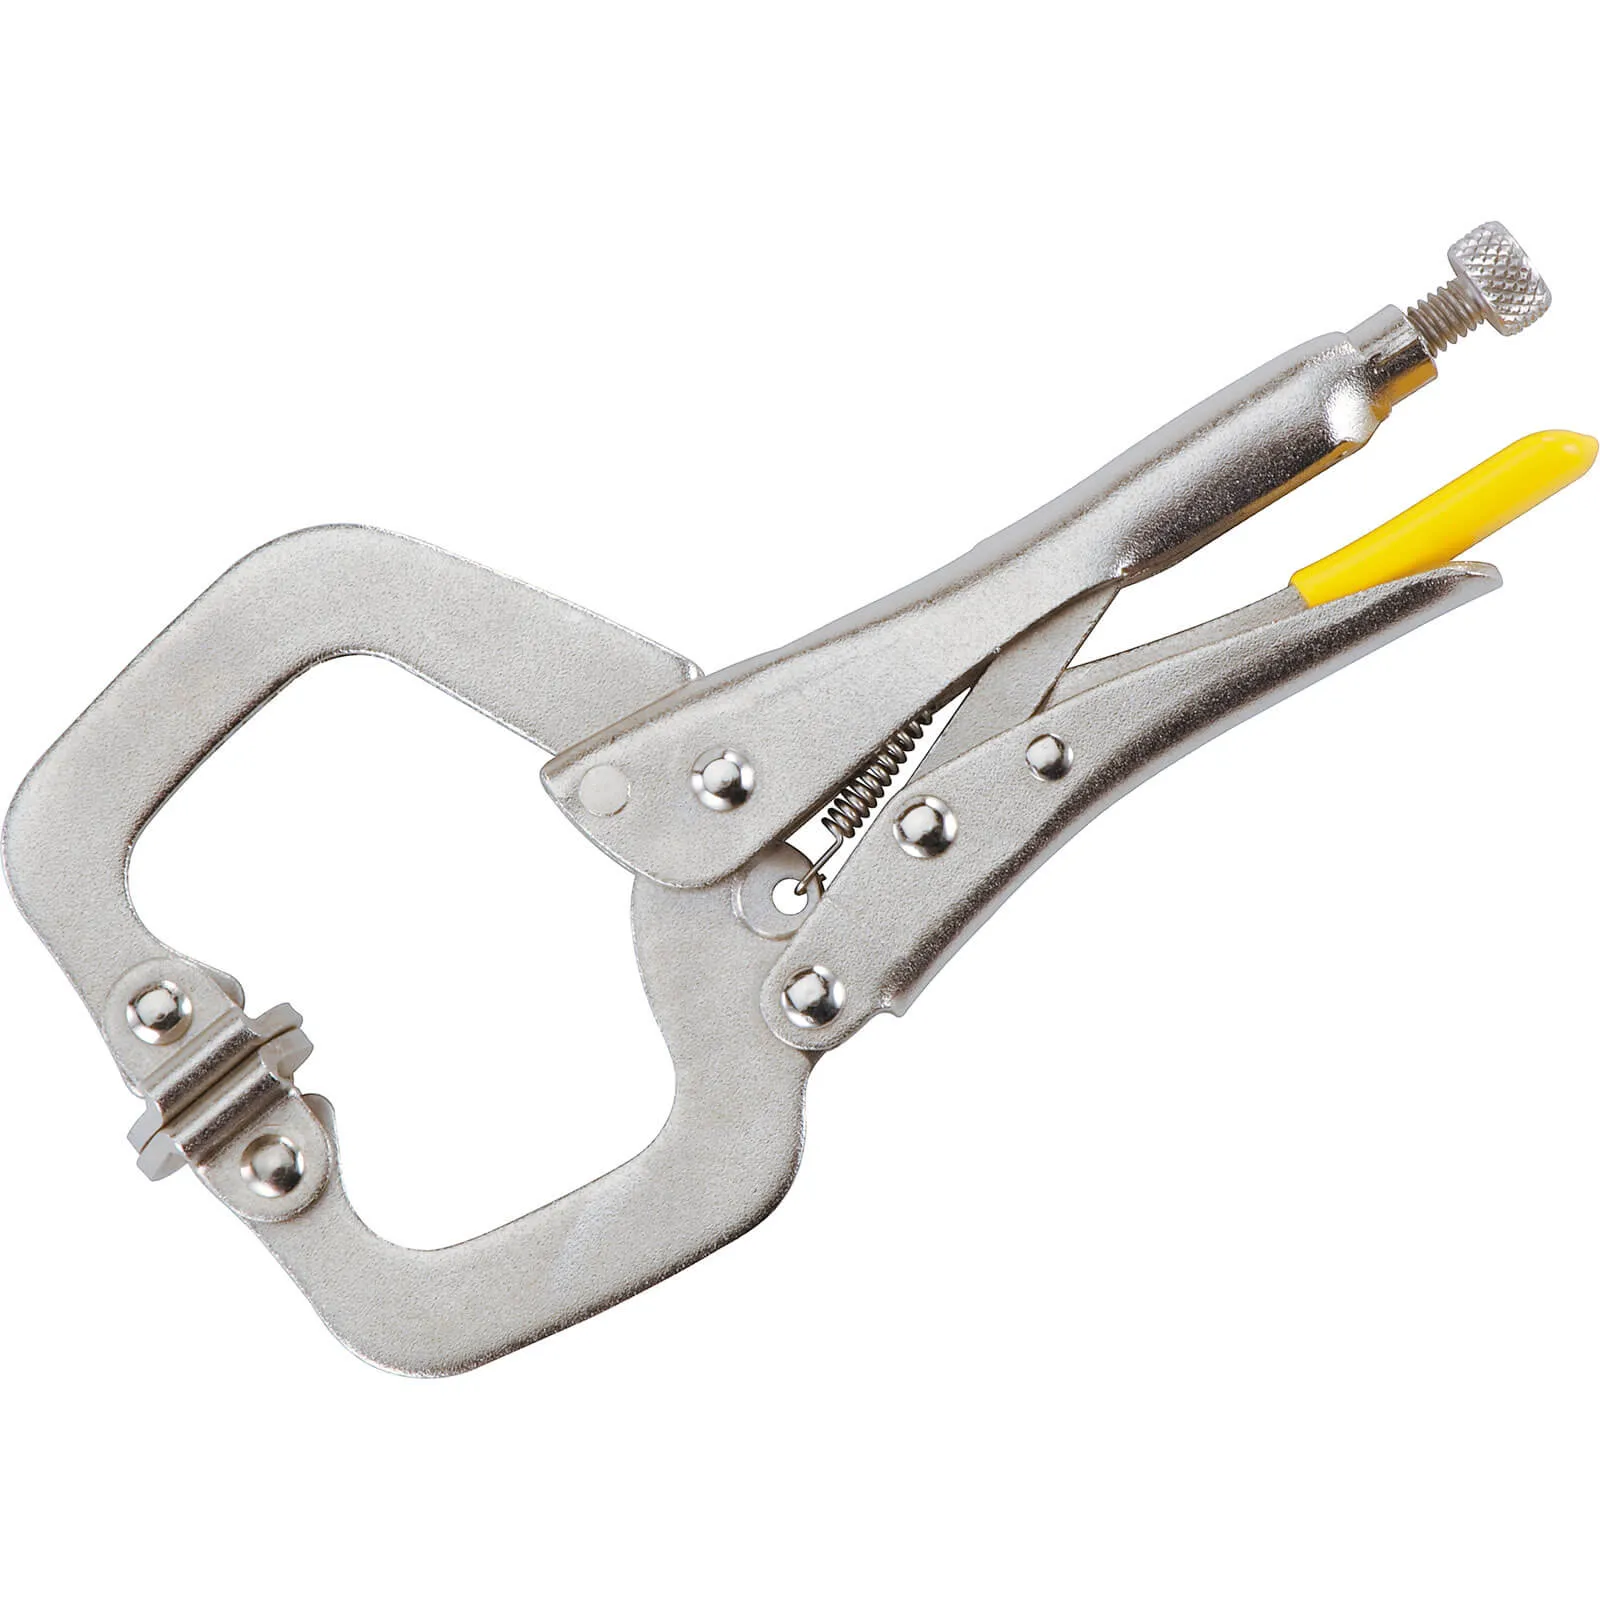 Stanley Locking C Clamp Pliers - 76mm